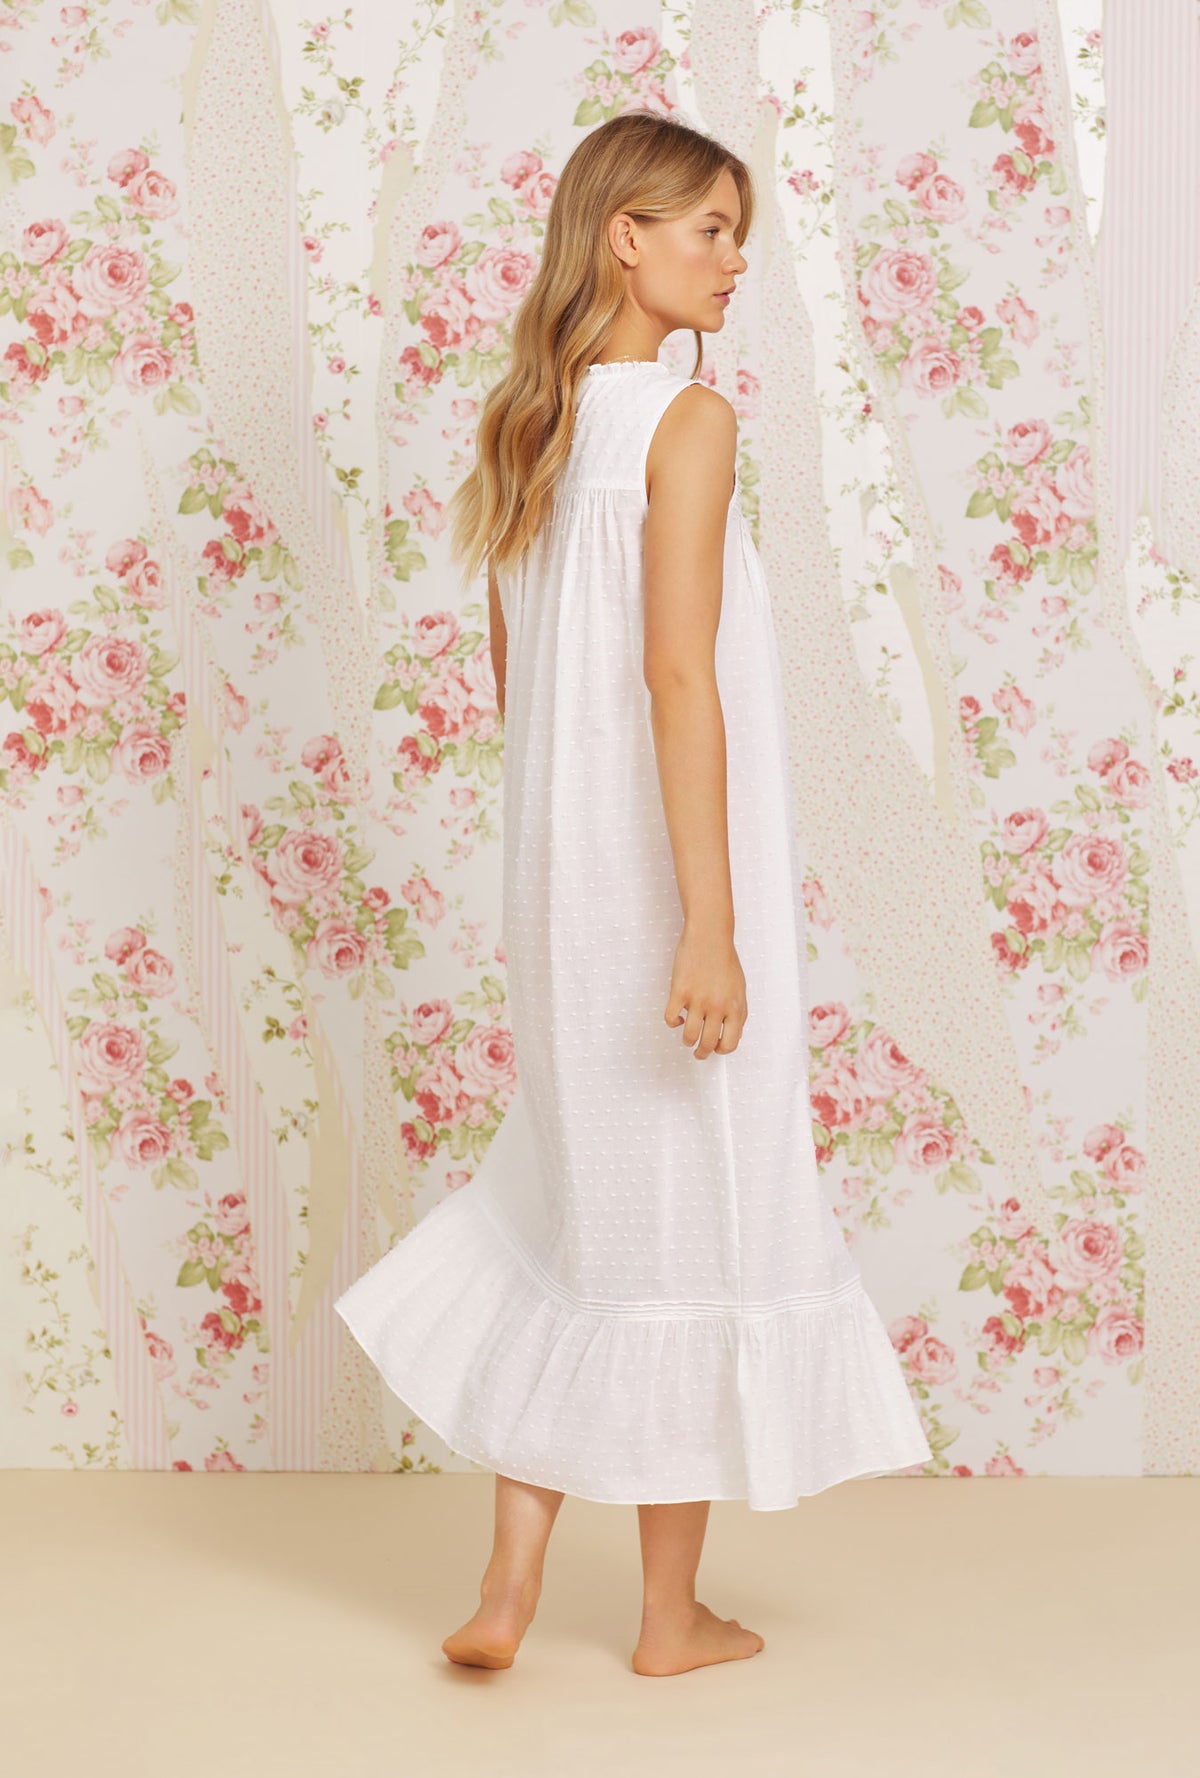 A lady wearing white sleeveless swiss dot eileen cotton nightgown.